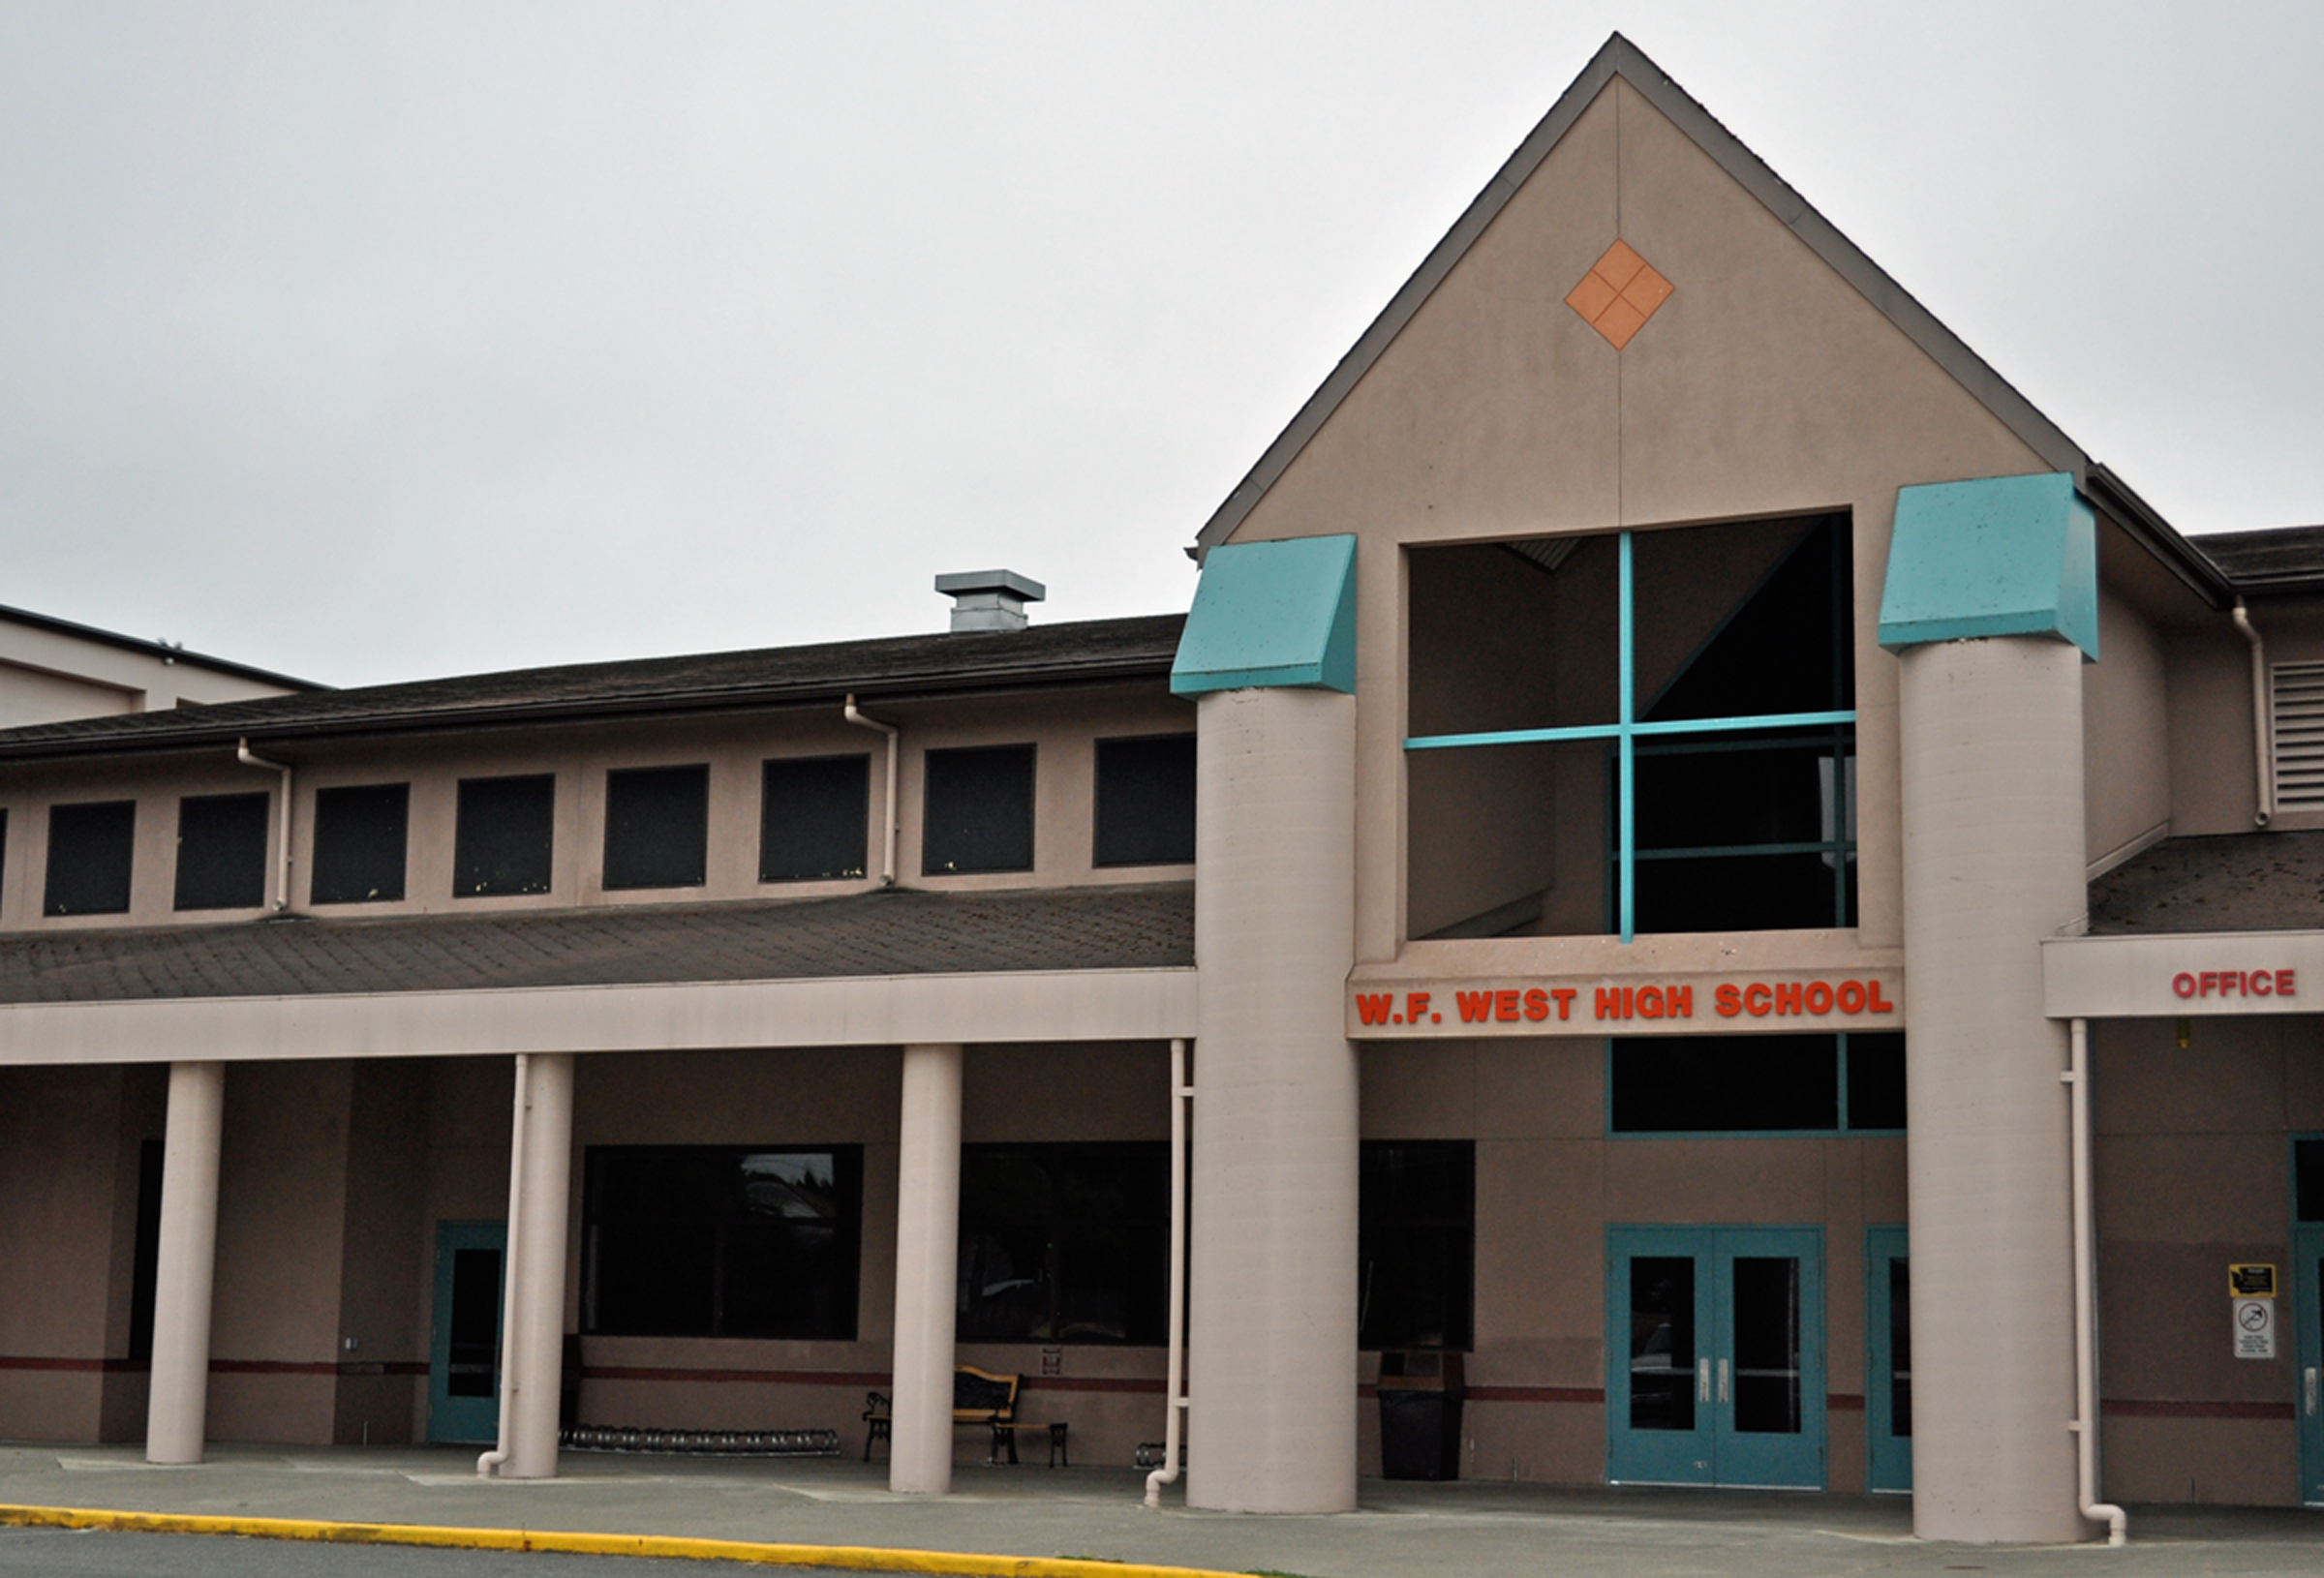 Image of W.F. West High School